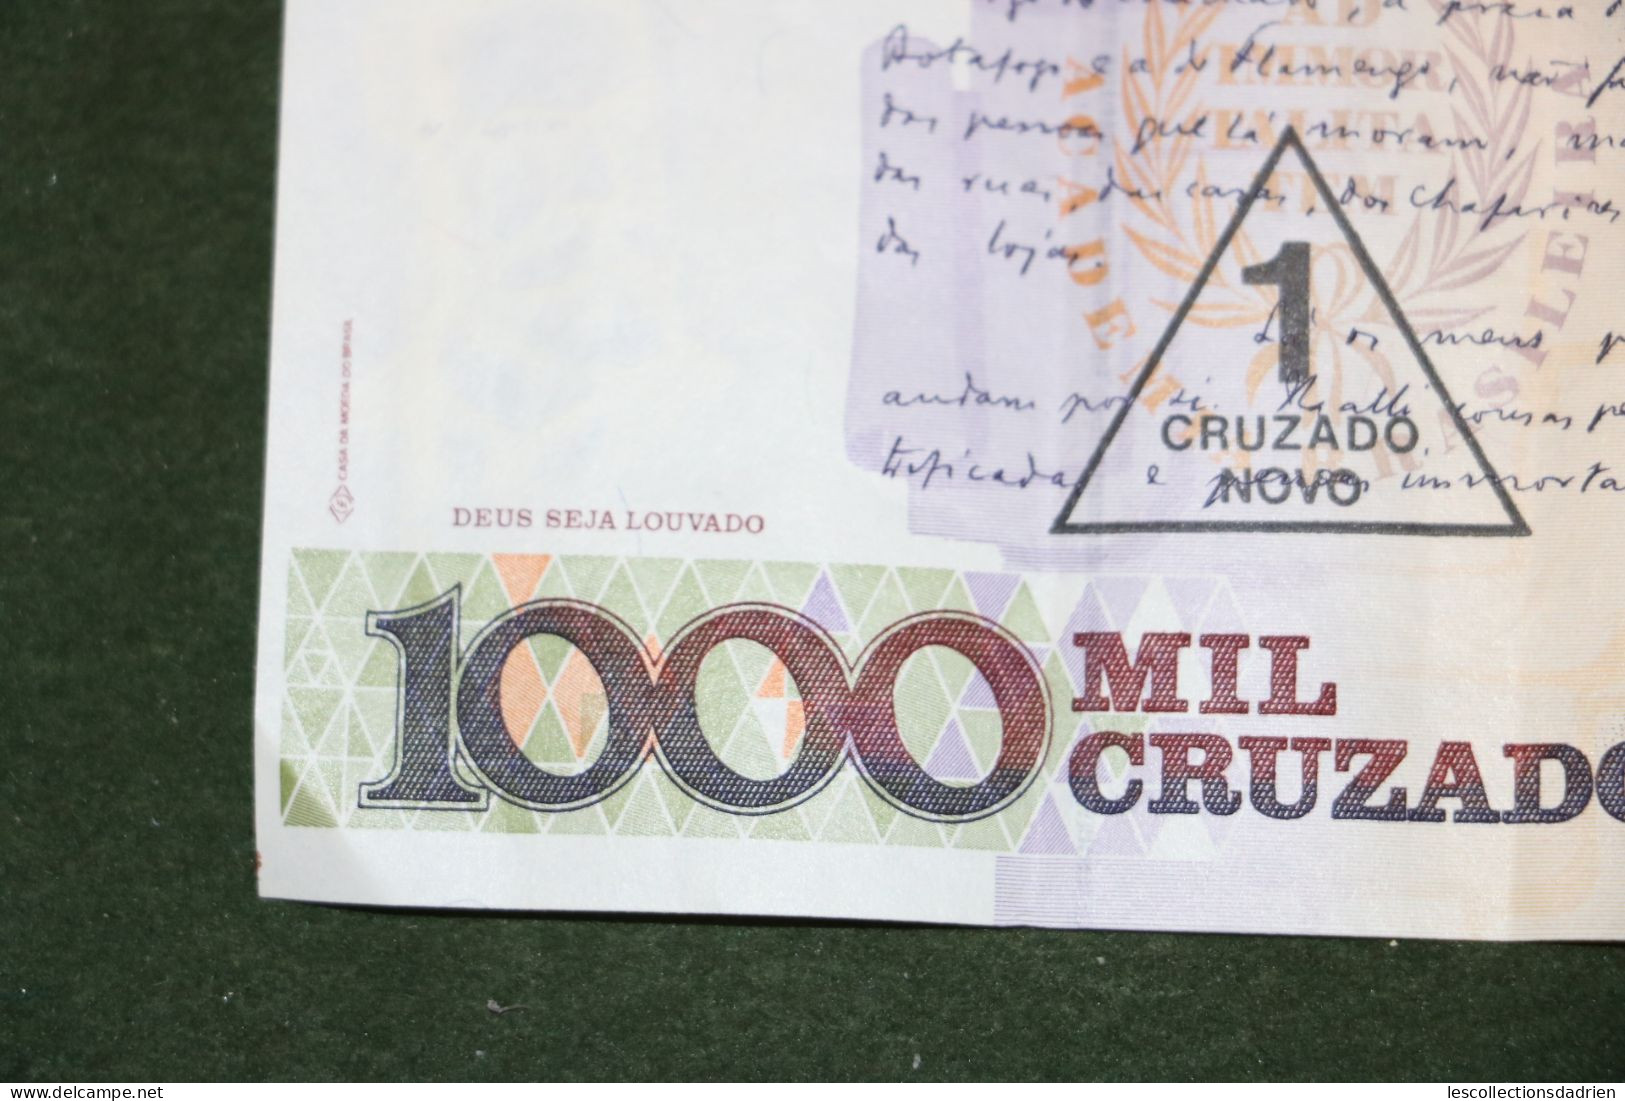 Billet de 1000 cruzados cachet 1 cruzado novo - banknote Brazil